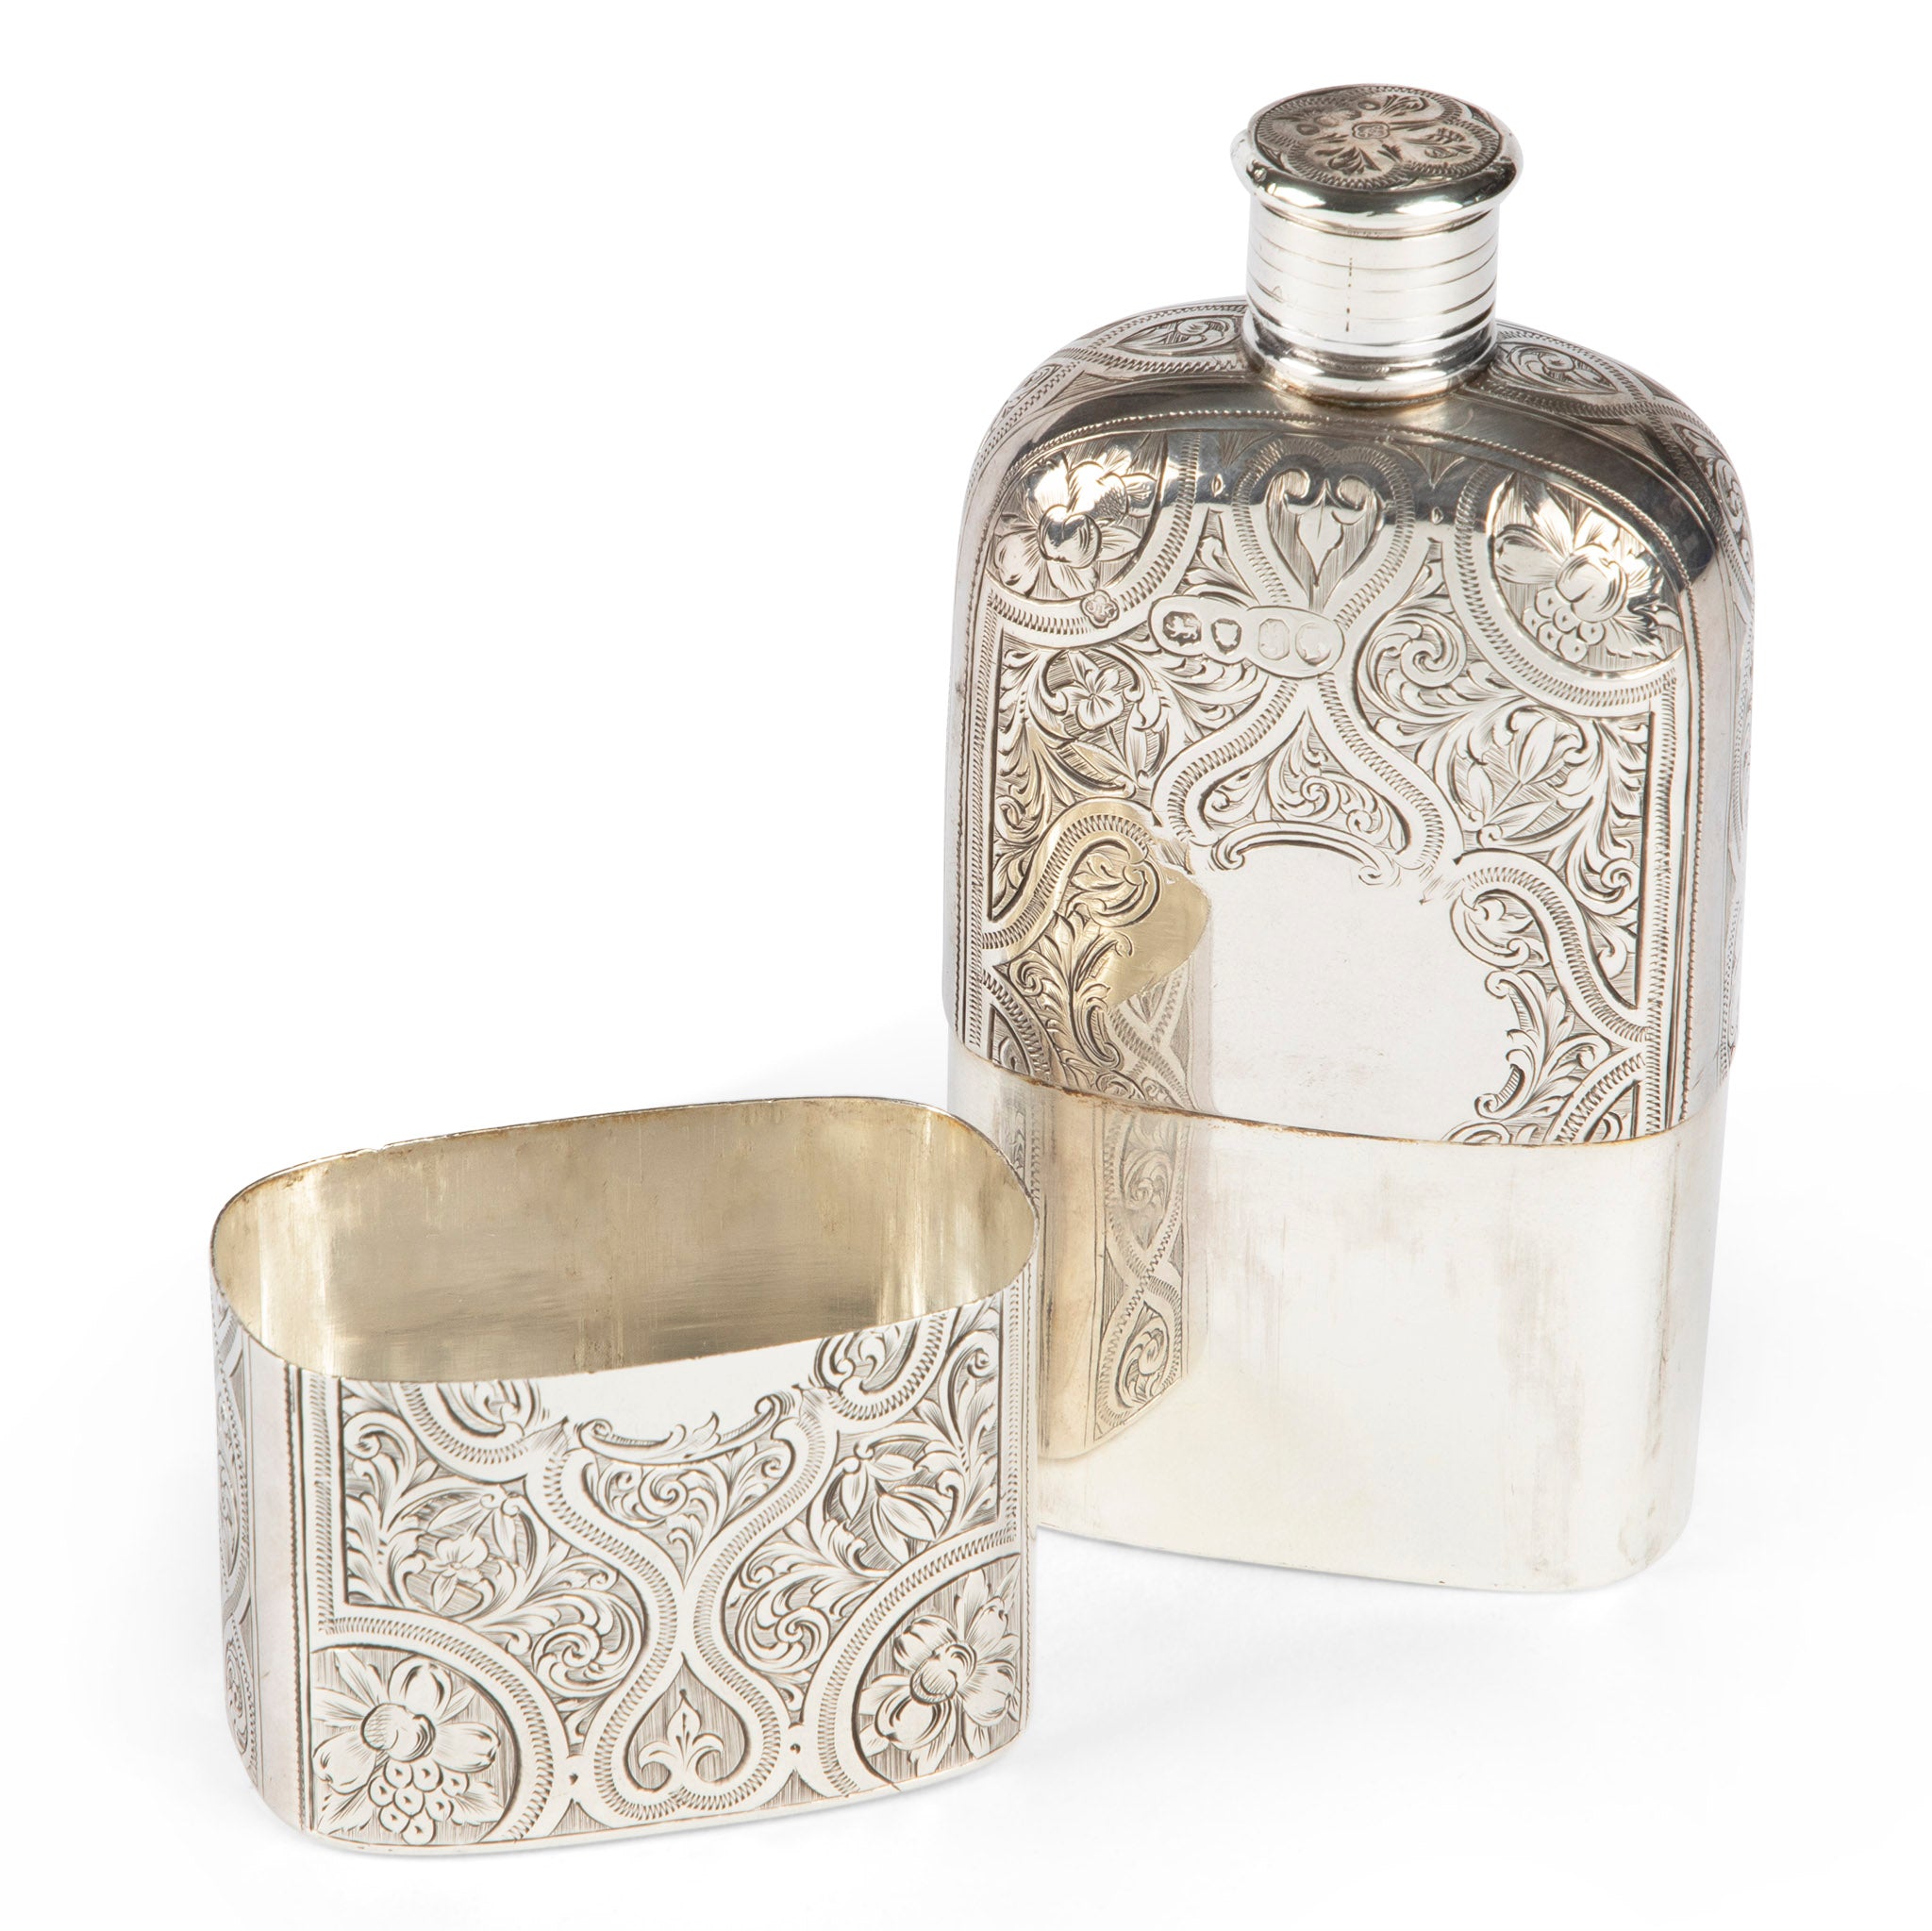 Antique Sterling Silver Engraved Hip Flask